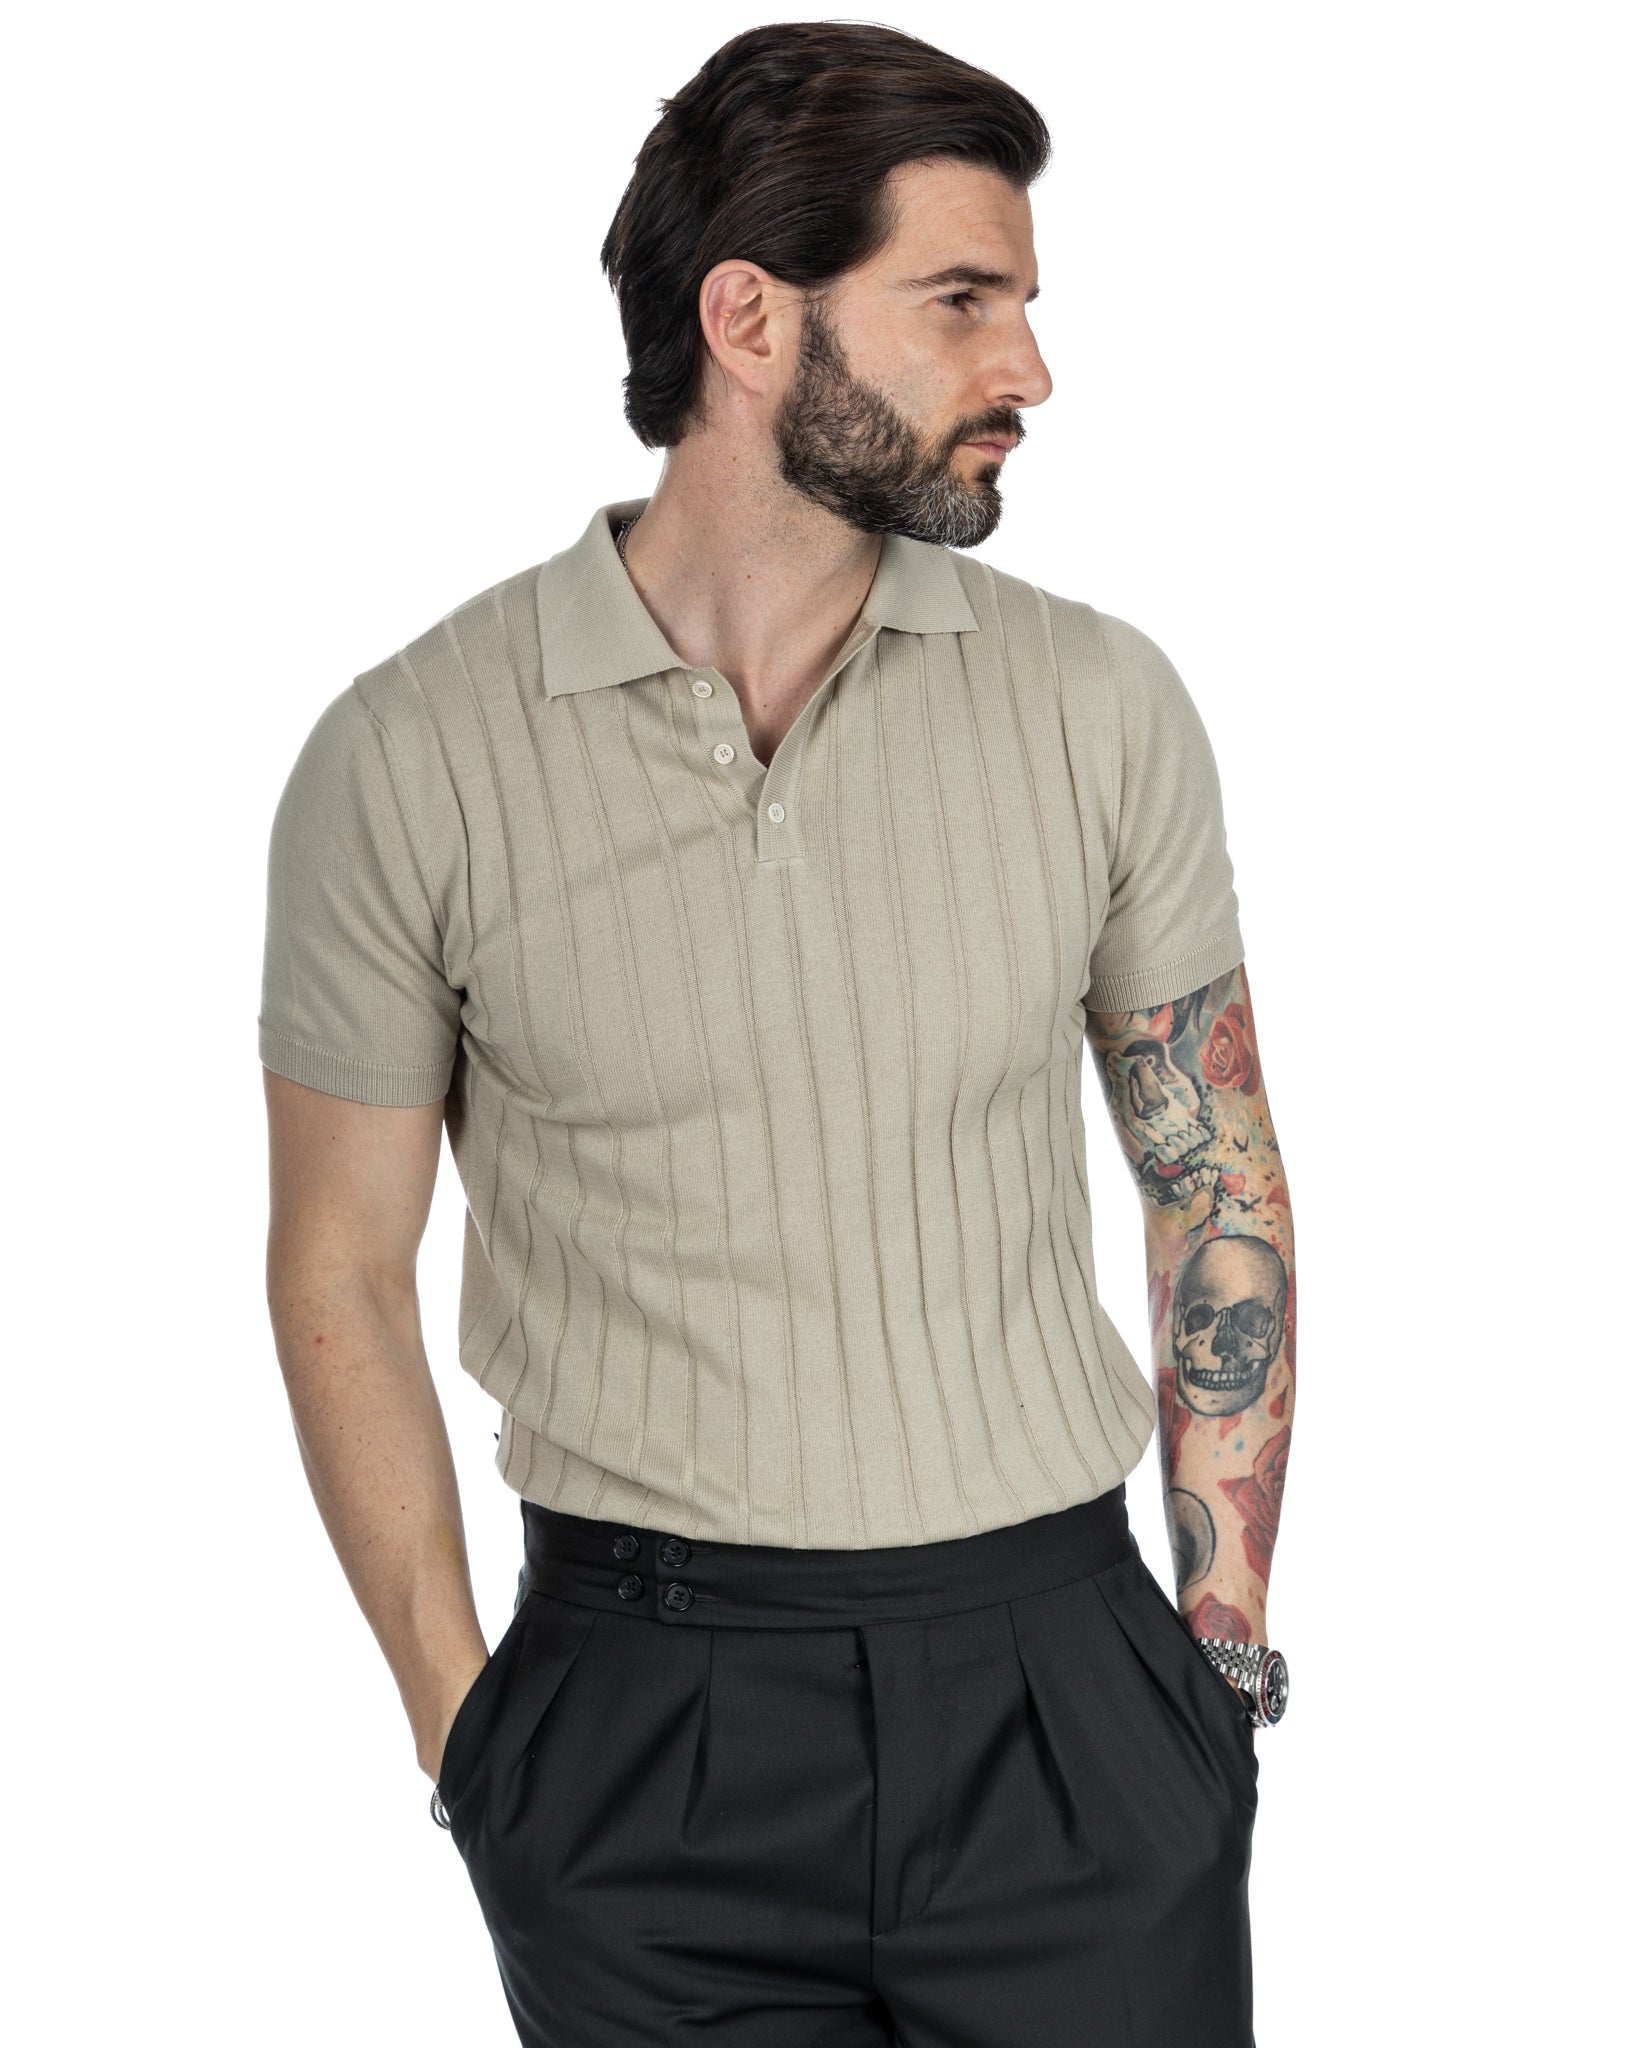 Rafael - beige ribbed knit polo shirt